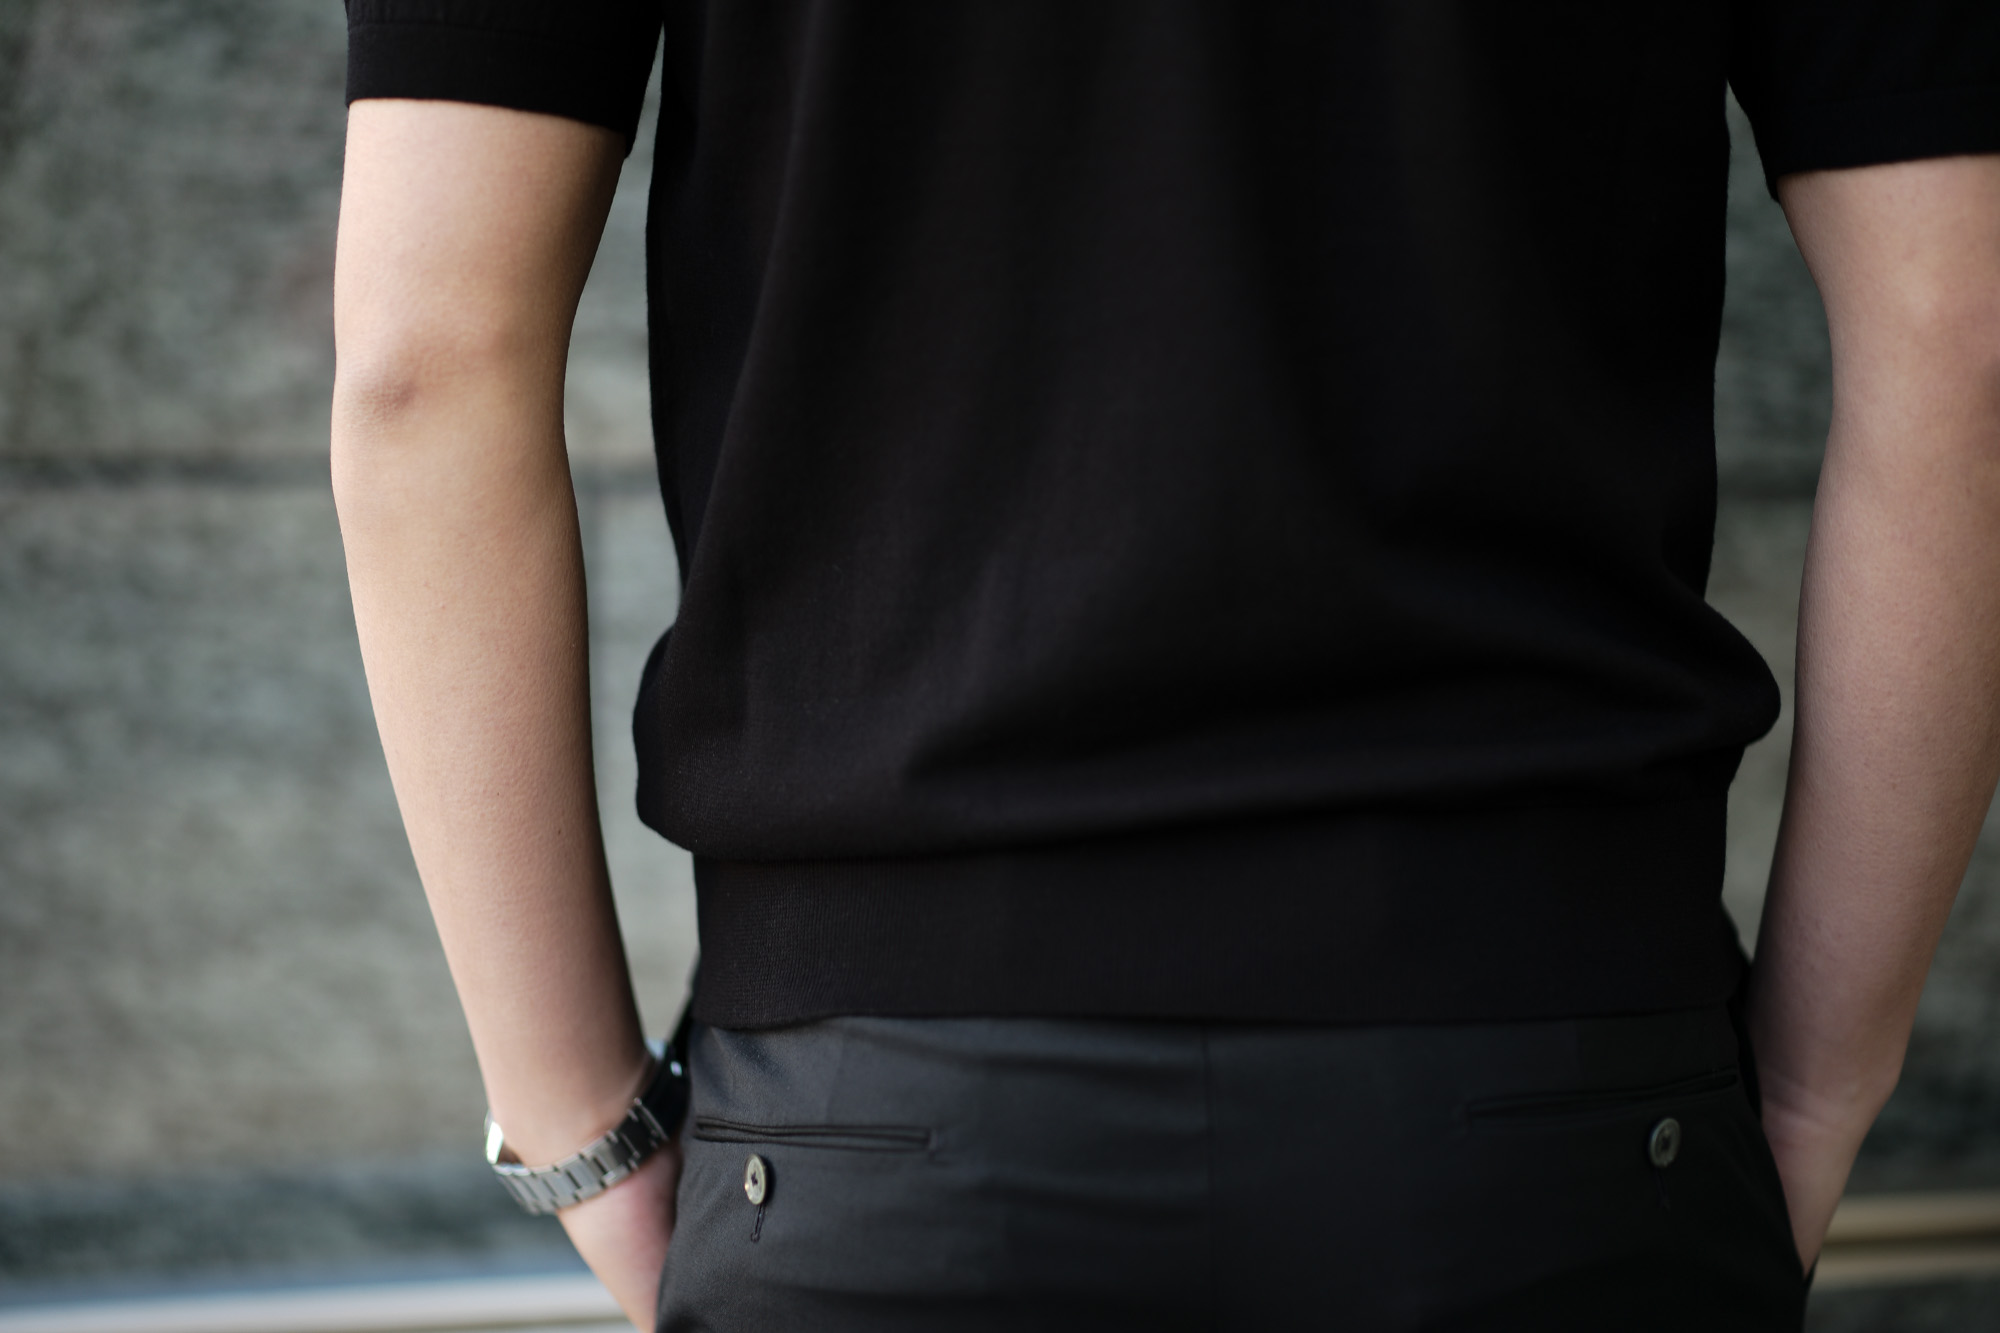 Cruciani(クルチアーニ) 33G Knit Polo Shirt 33ゲージ コットン ニット ポロシャツ BLACK (ブラック・Z0048) made in italy (イタリア製) 2020 春夏新作 愛知 名古屋 altoediritto アルトエデリット